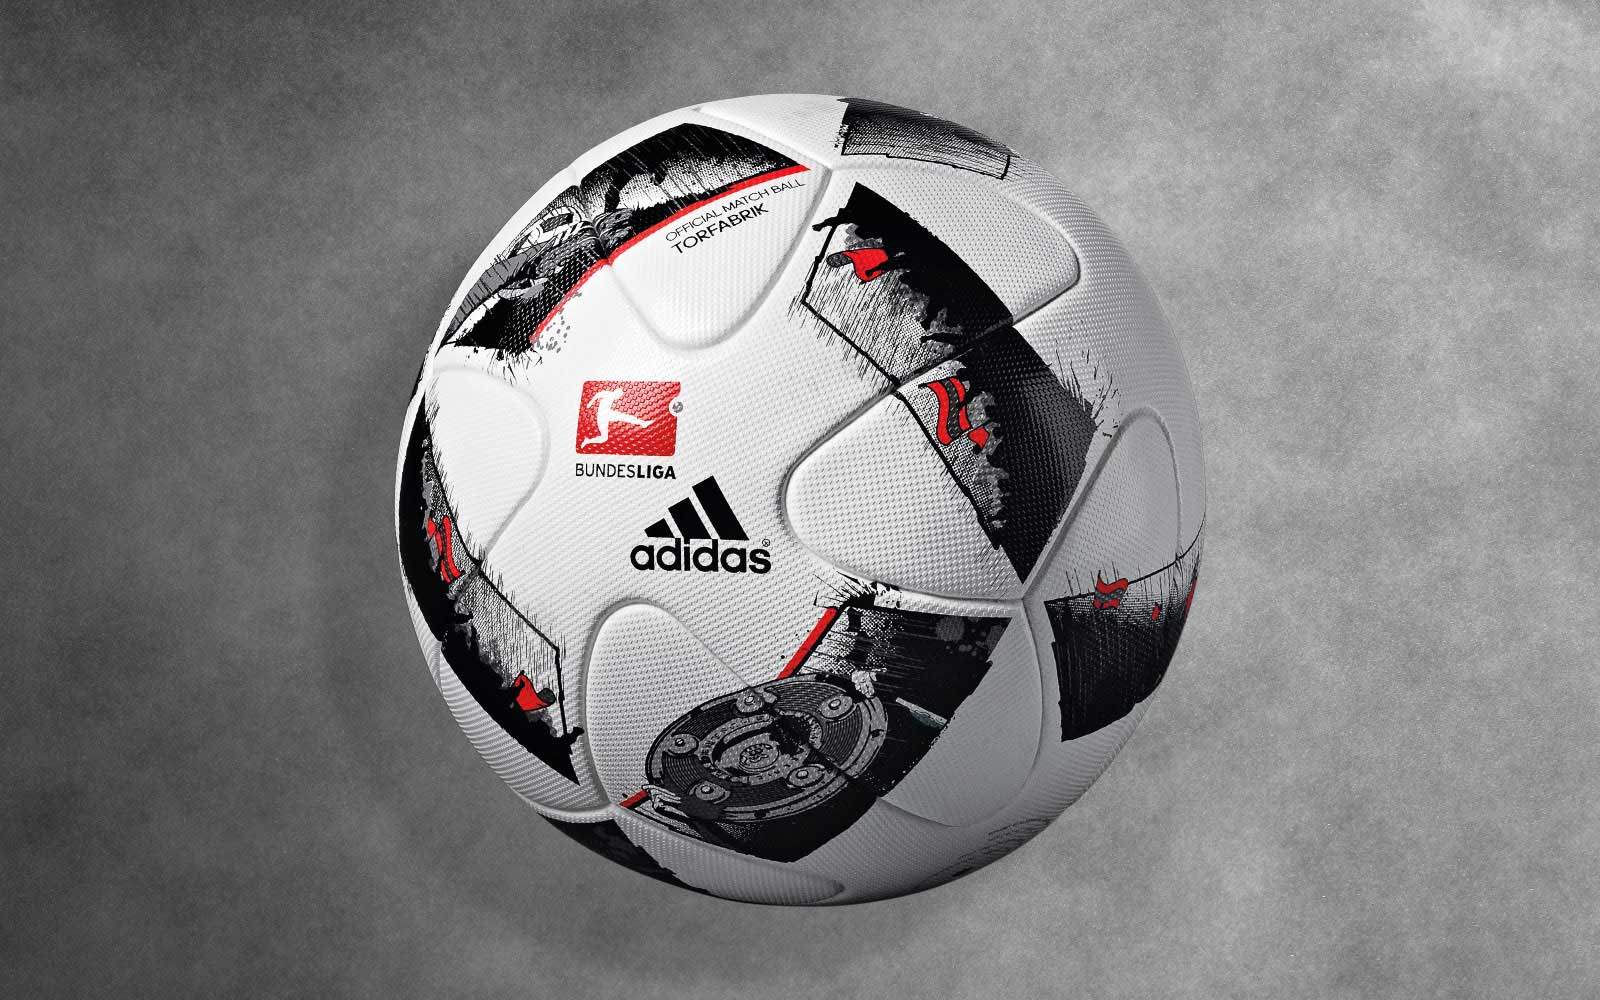 Adidas Torfrabik 16-17 Bundesliga Ball Released - Footy ...